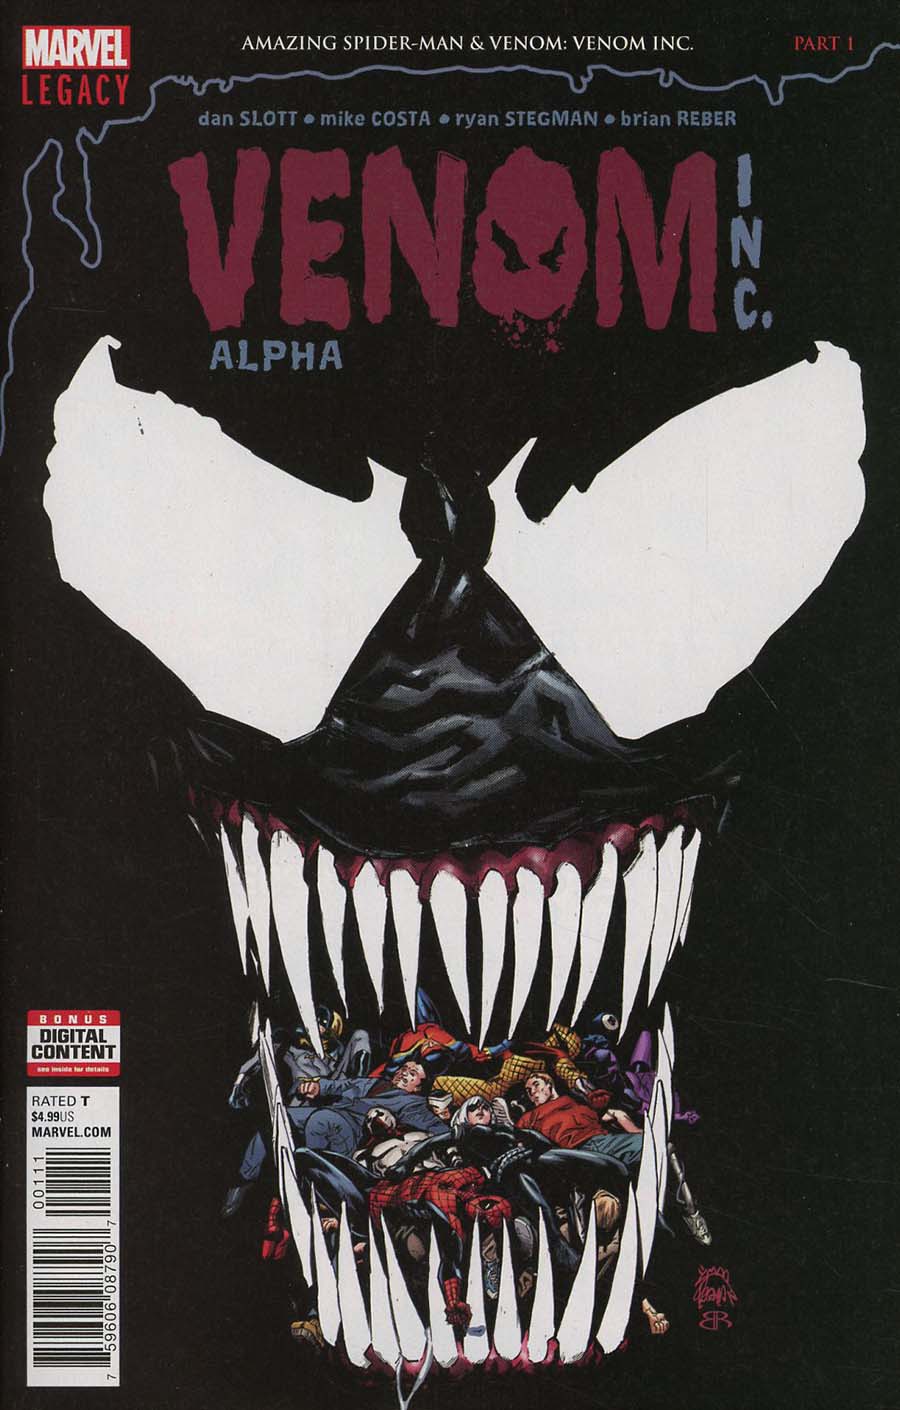 Amazing Spider-Man Venom Venom Inc Alpha #1 Cover A Regular Ryan Stegman Cover (Venom Inc Part 1)(Marvel Legacy Tie-In)